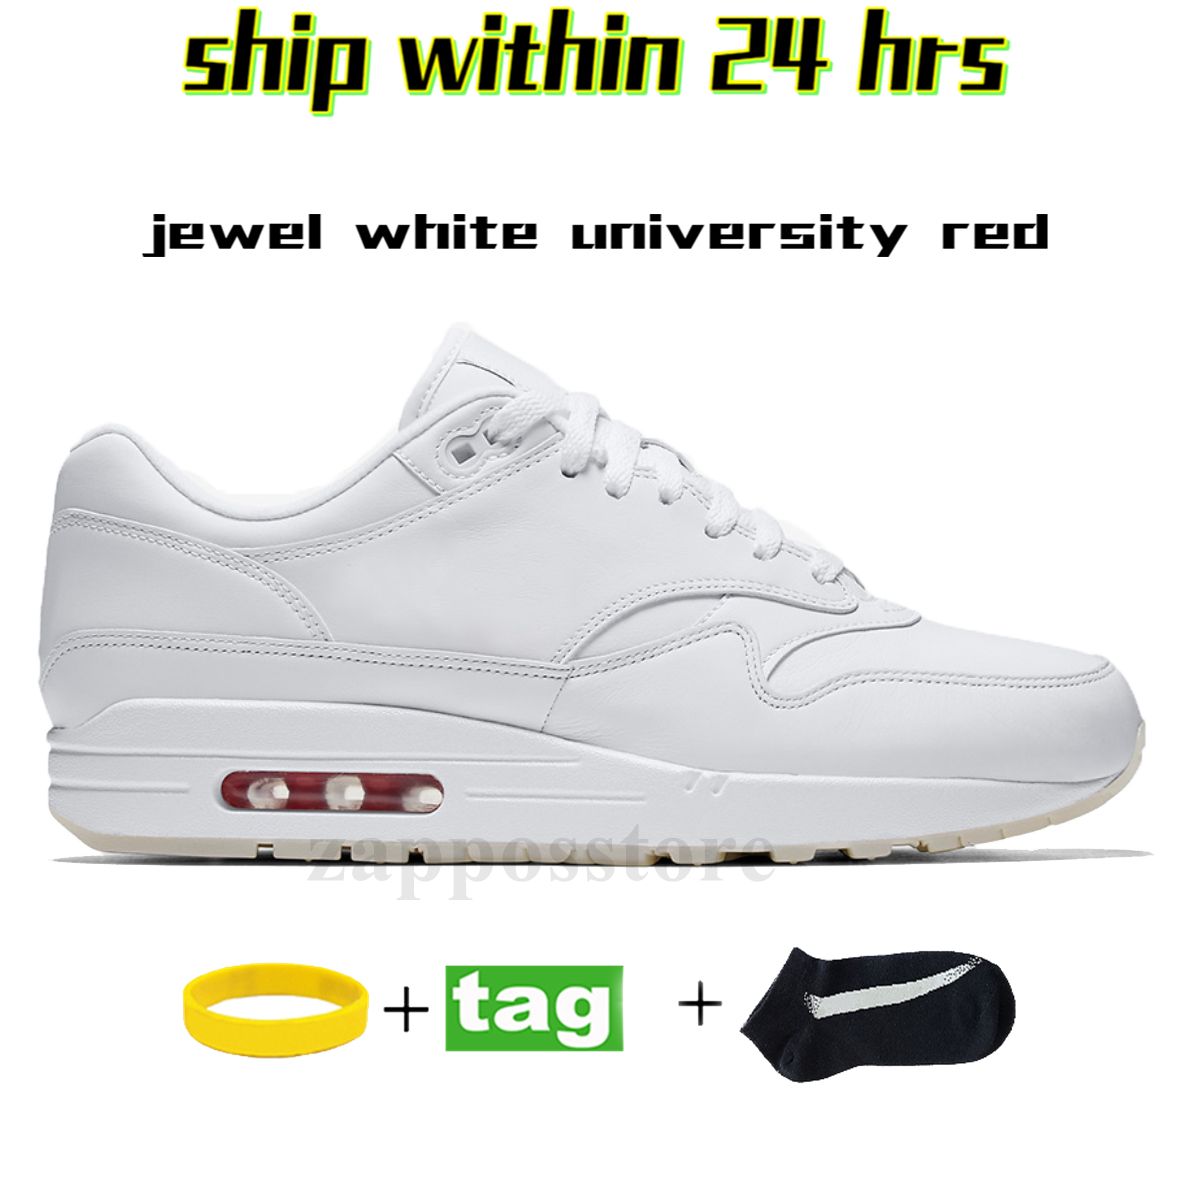 25 Jewel White University Red